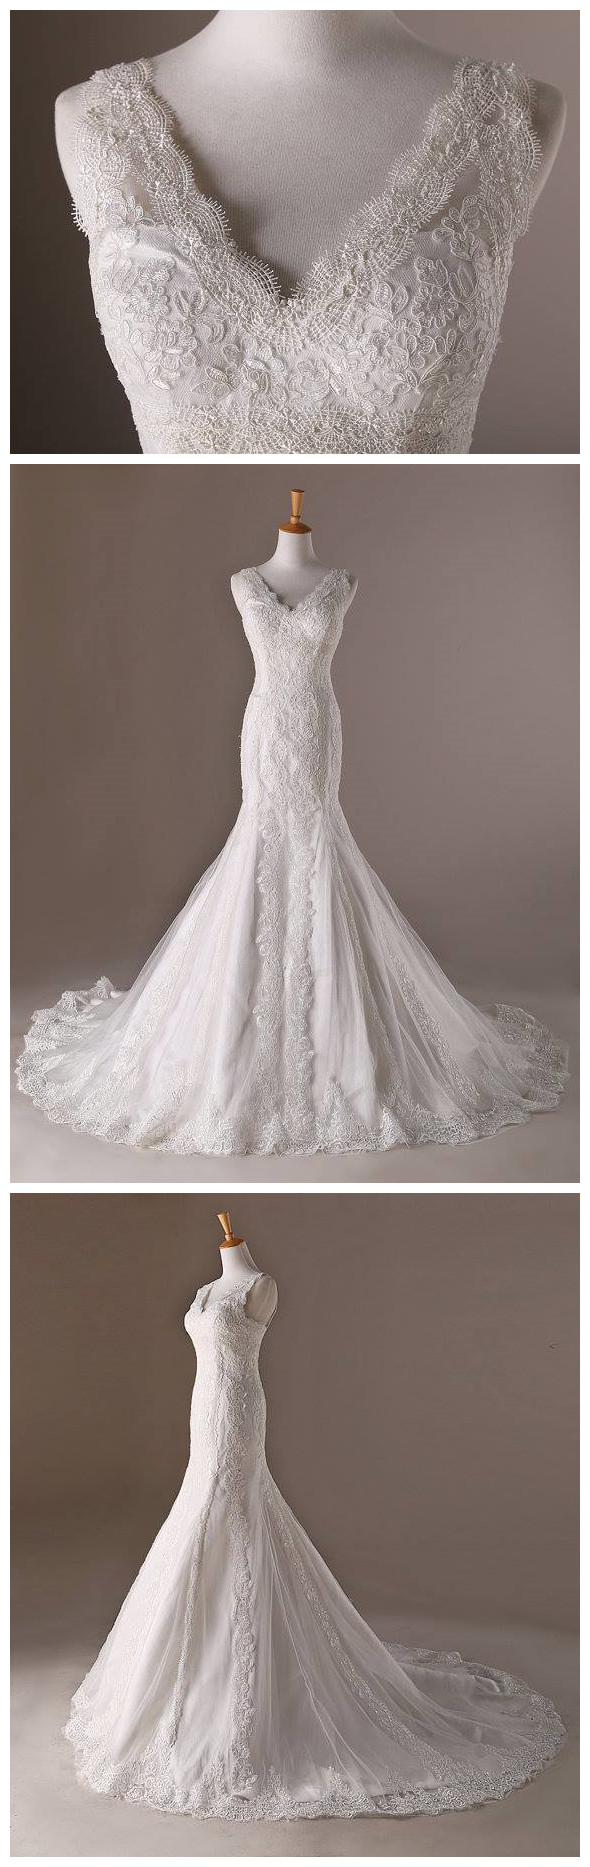 Wedding Dresses, Wedding Gown,v Neck White Lace Mermaid Wedding Dresses 2017 Vintage Bridal Gowns